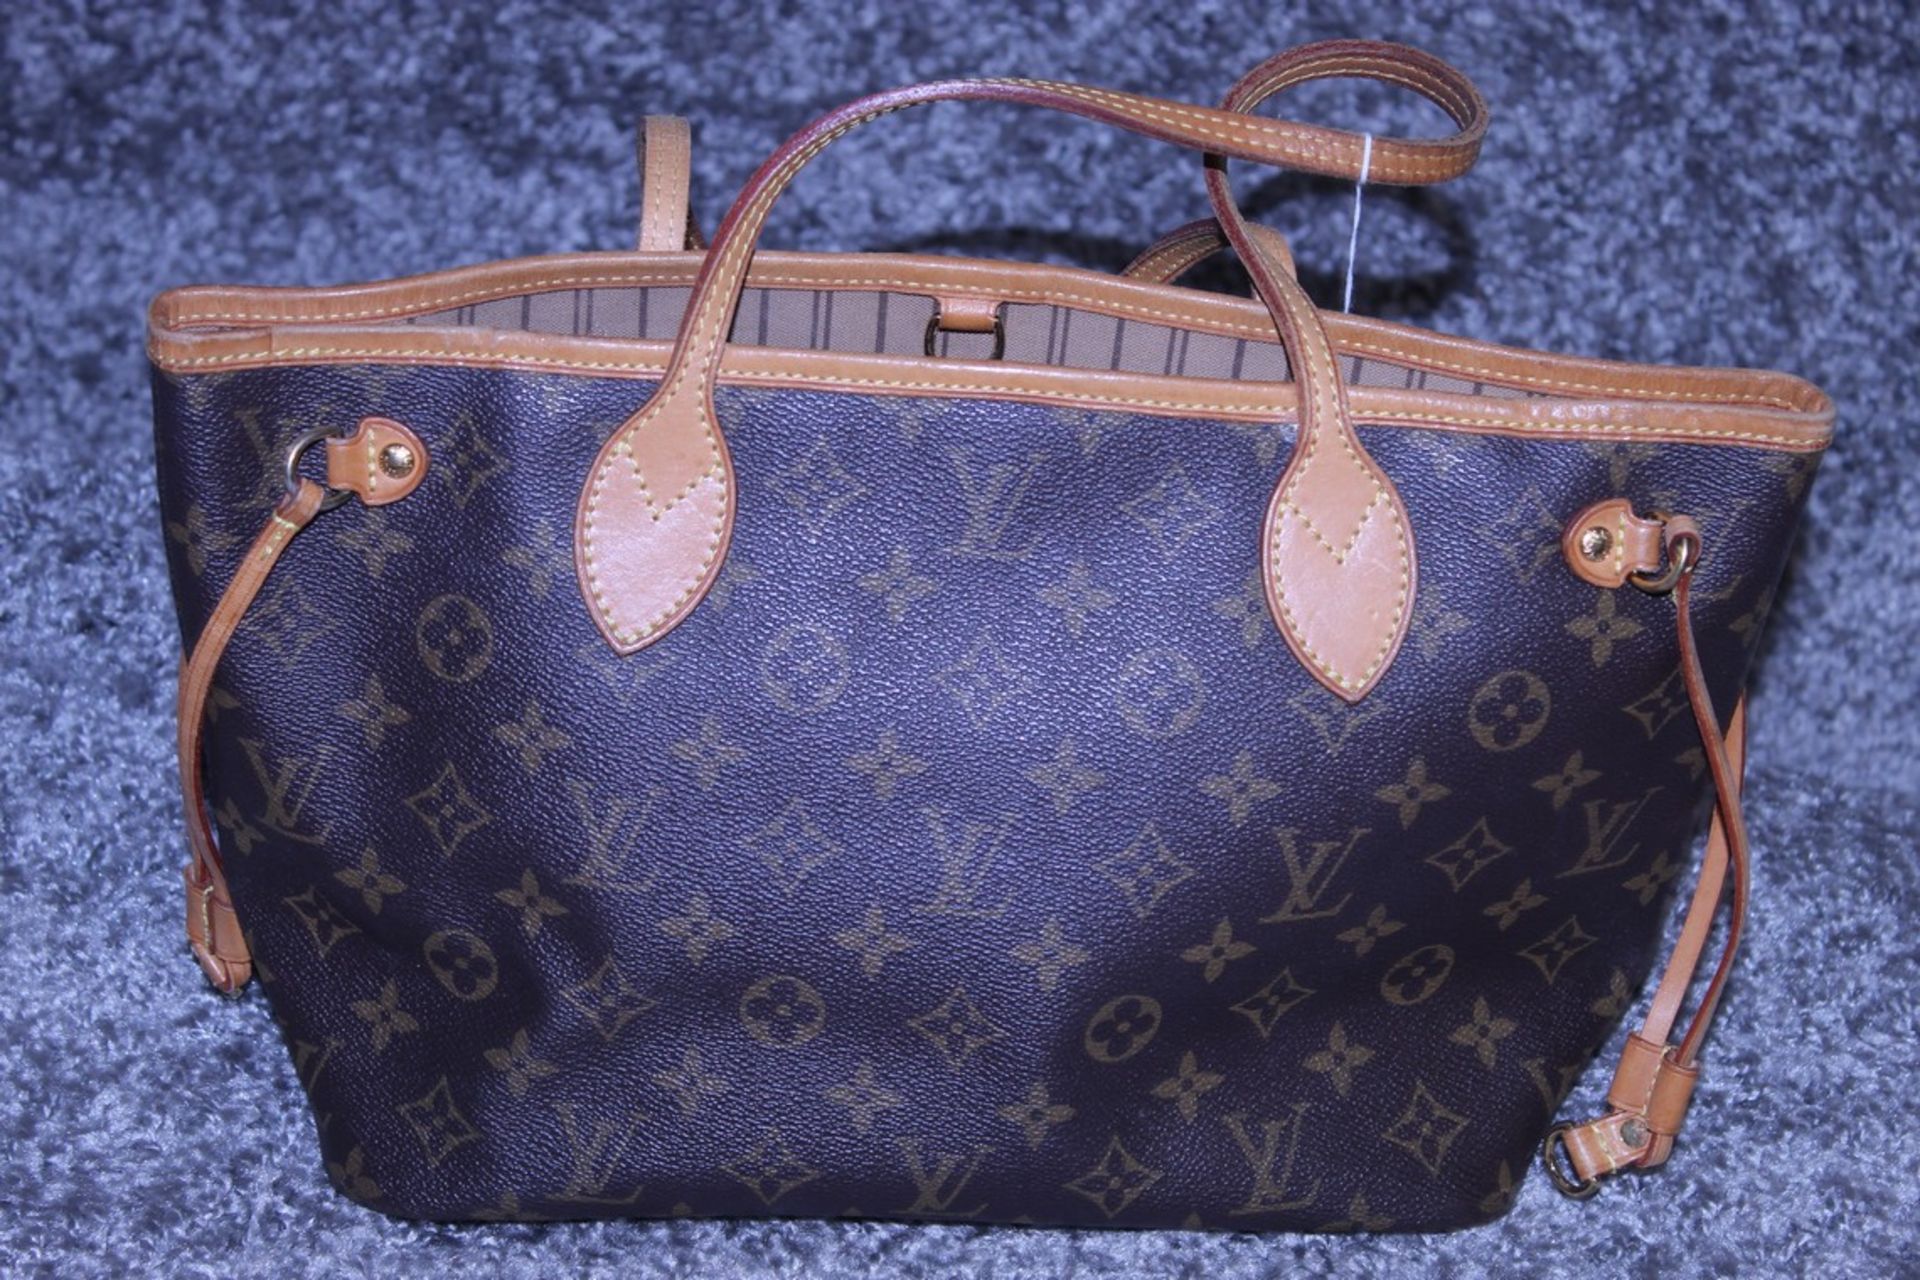 Rrp £1,500 Louis Vuitton Neverfull Shoulder Bag - Image 2 of 4